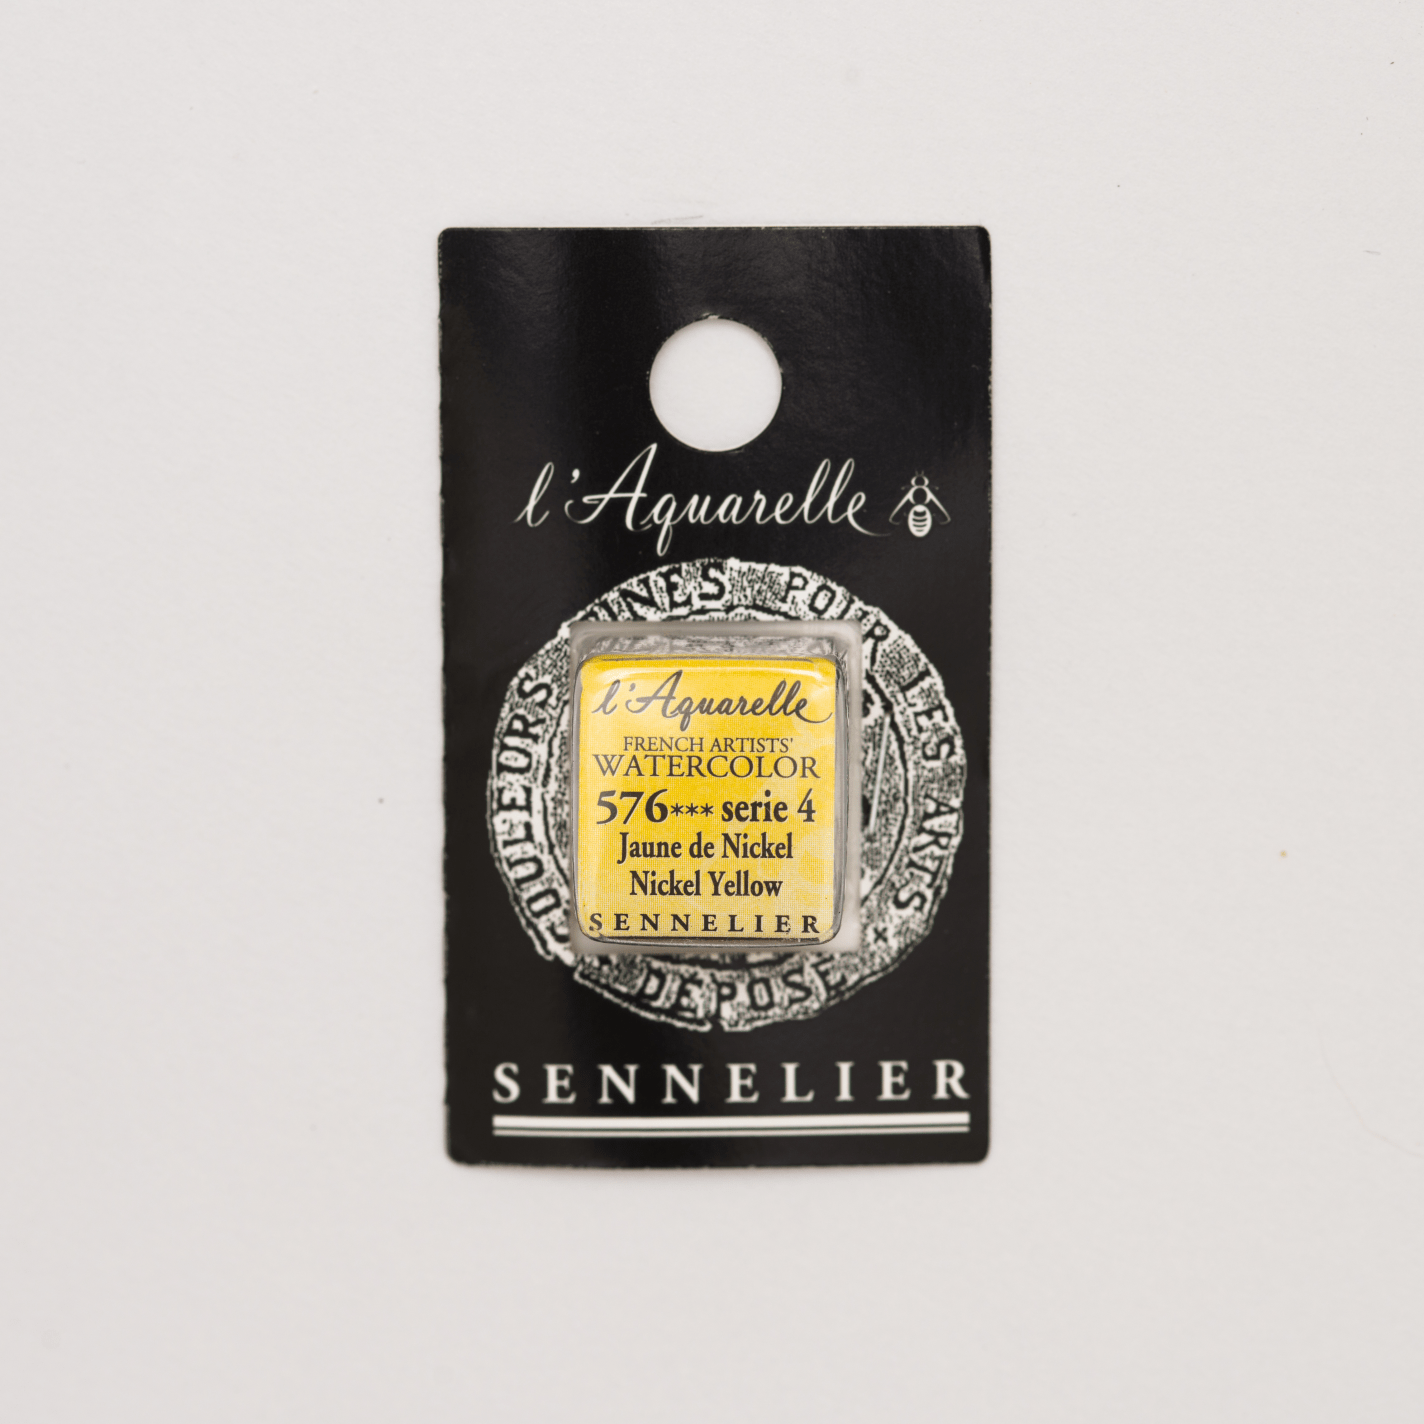 Sennelier Aquarelle pans 1/2 pan Nickel Yellow